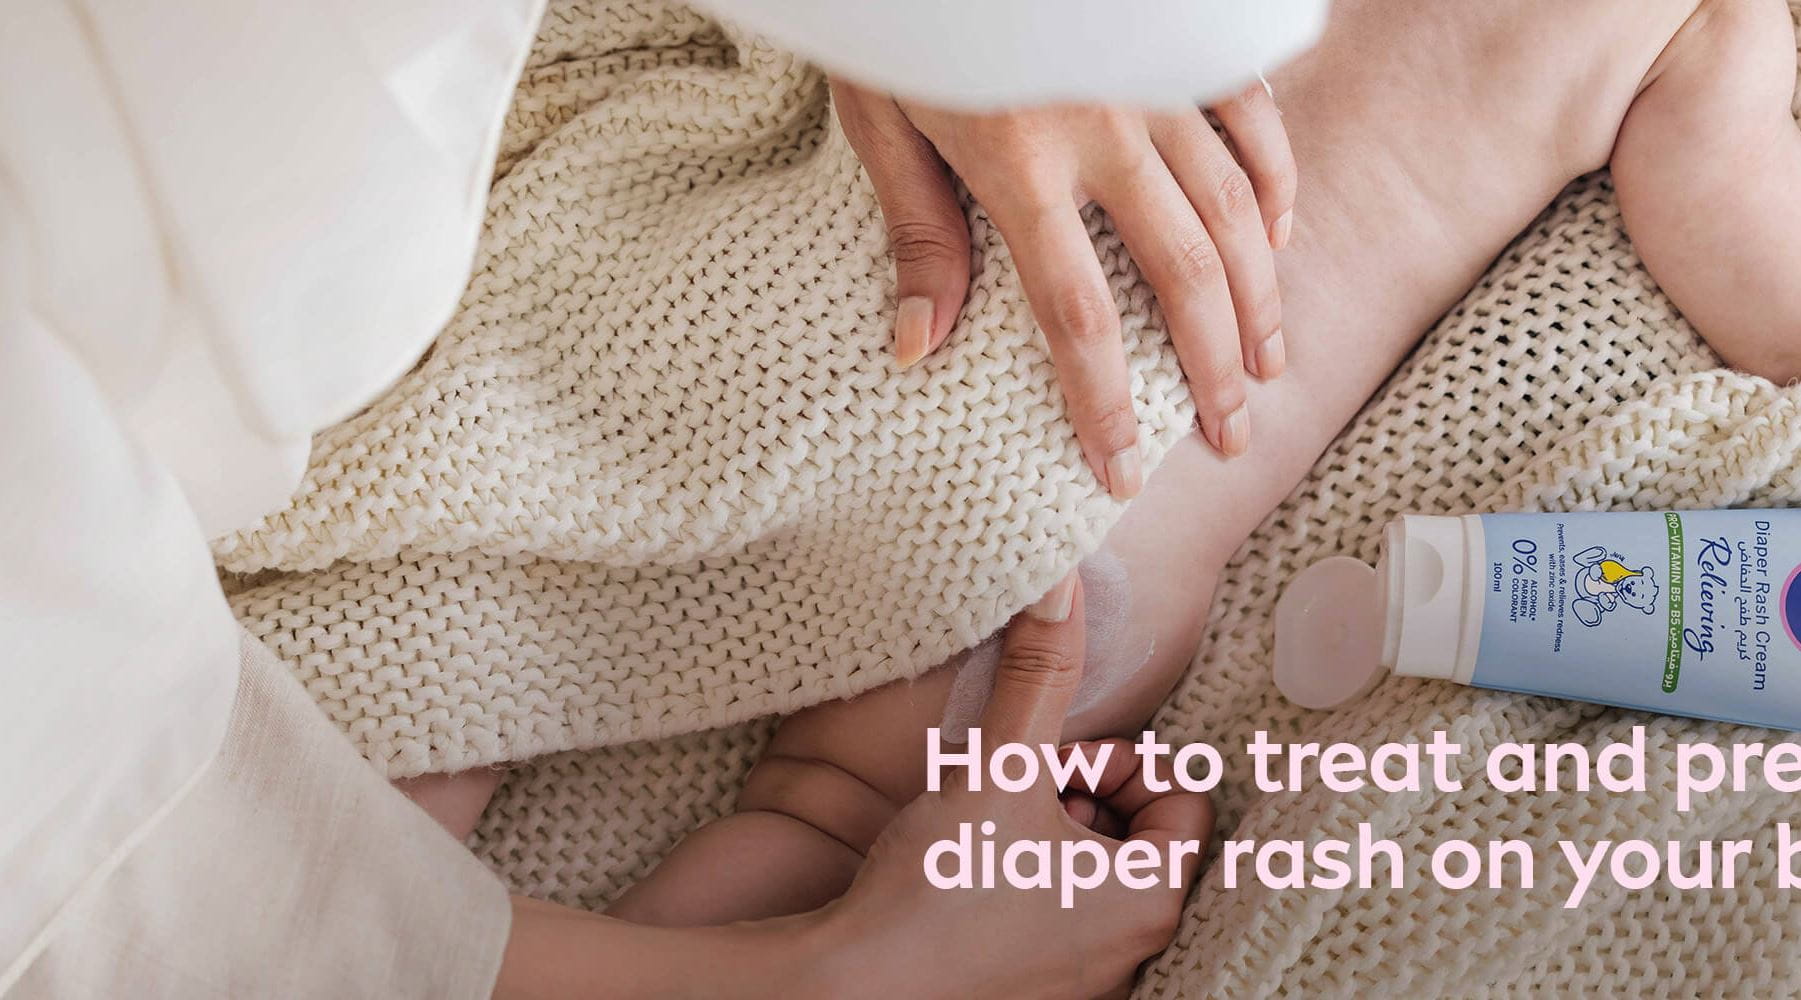 Protect Babies Skin from Diaper Rash